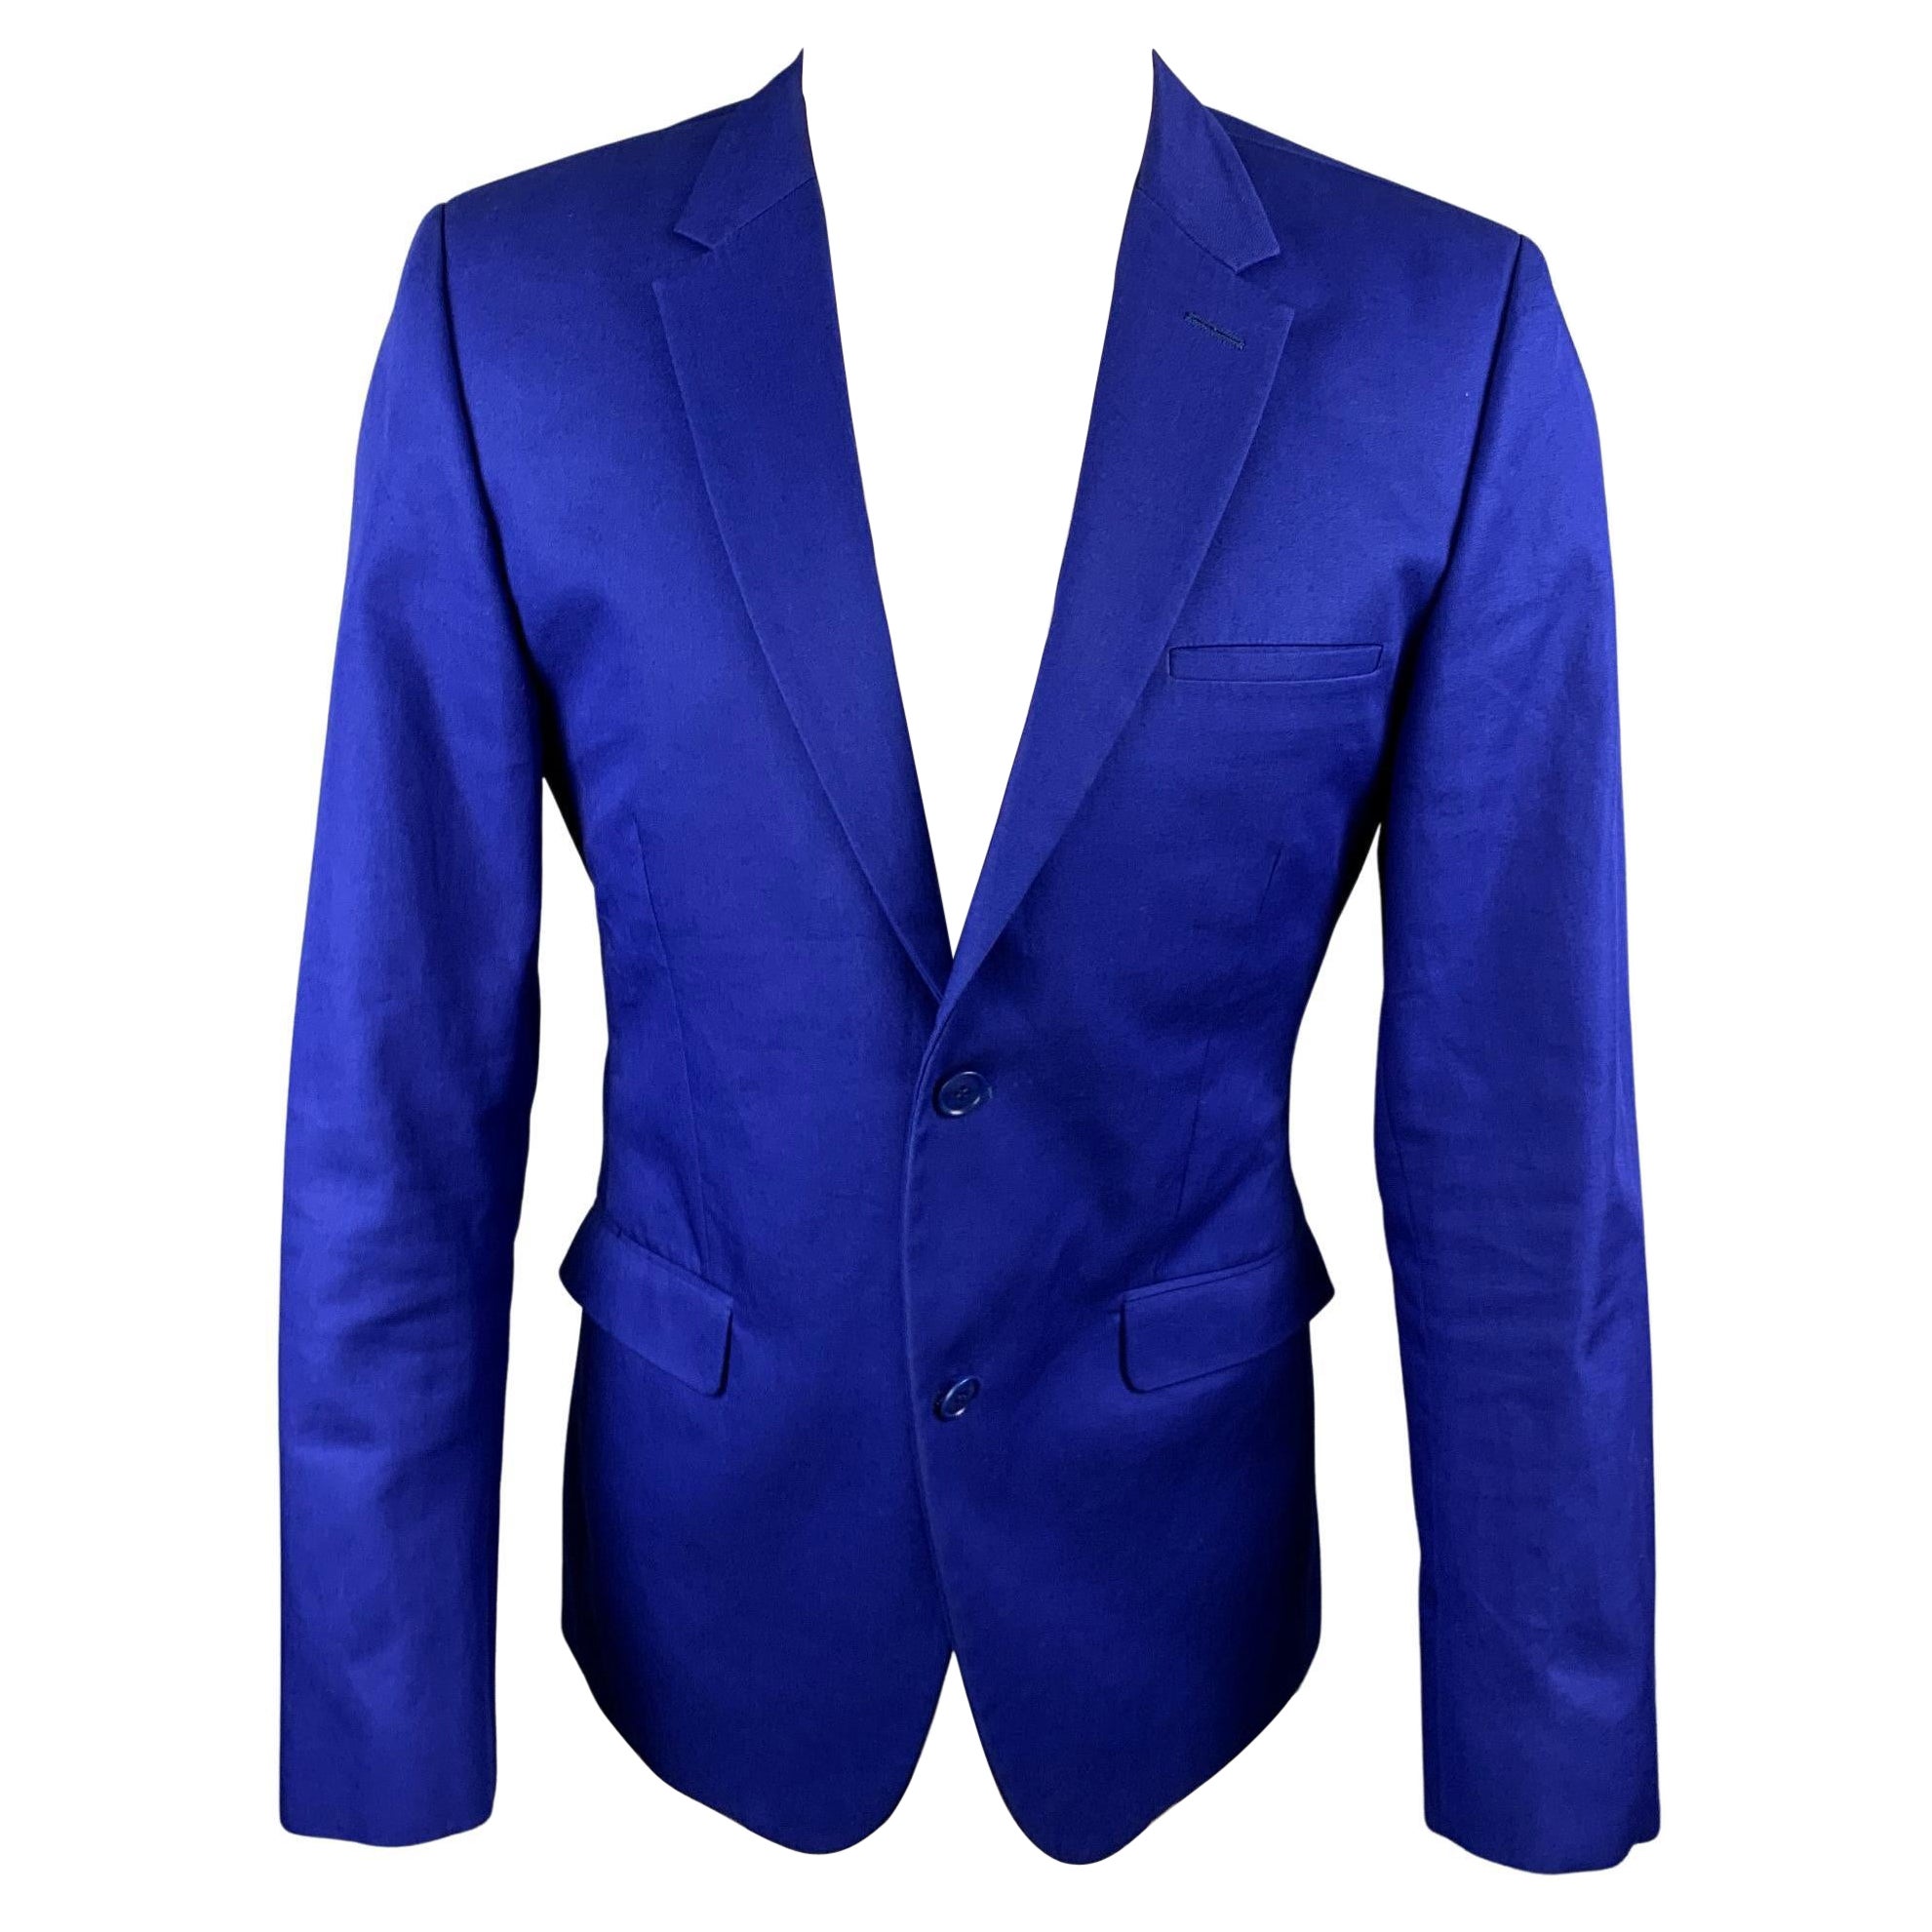 CALVIN KLEIN COLLECTION Size 40 Royal Blue Cotton / Polyester Notch Lapel Sport 